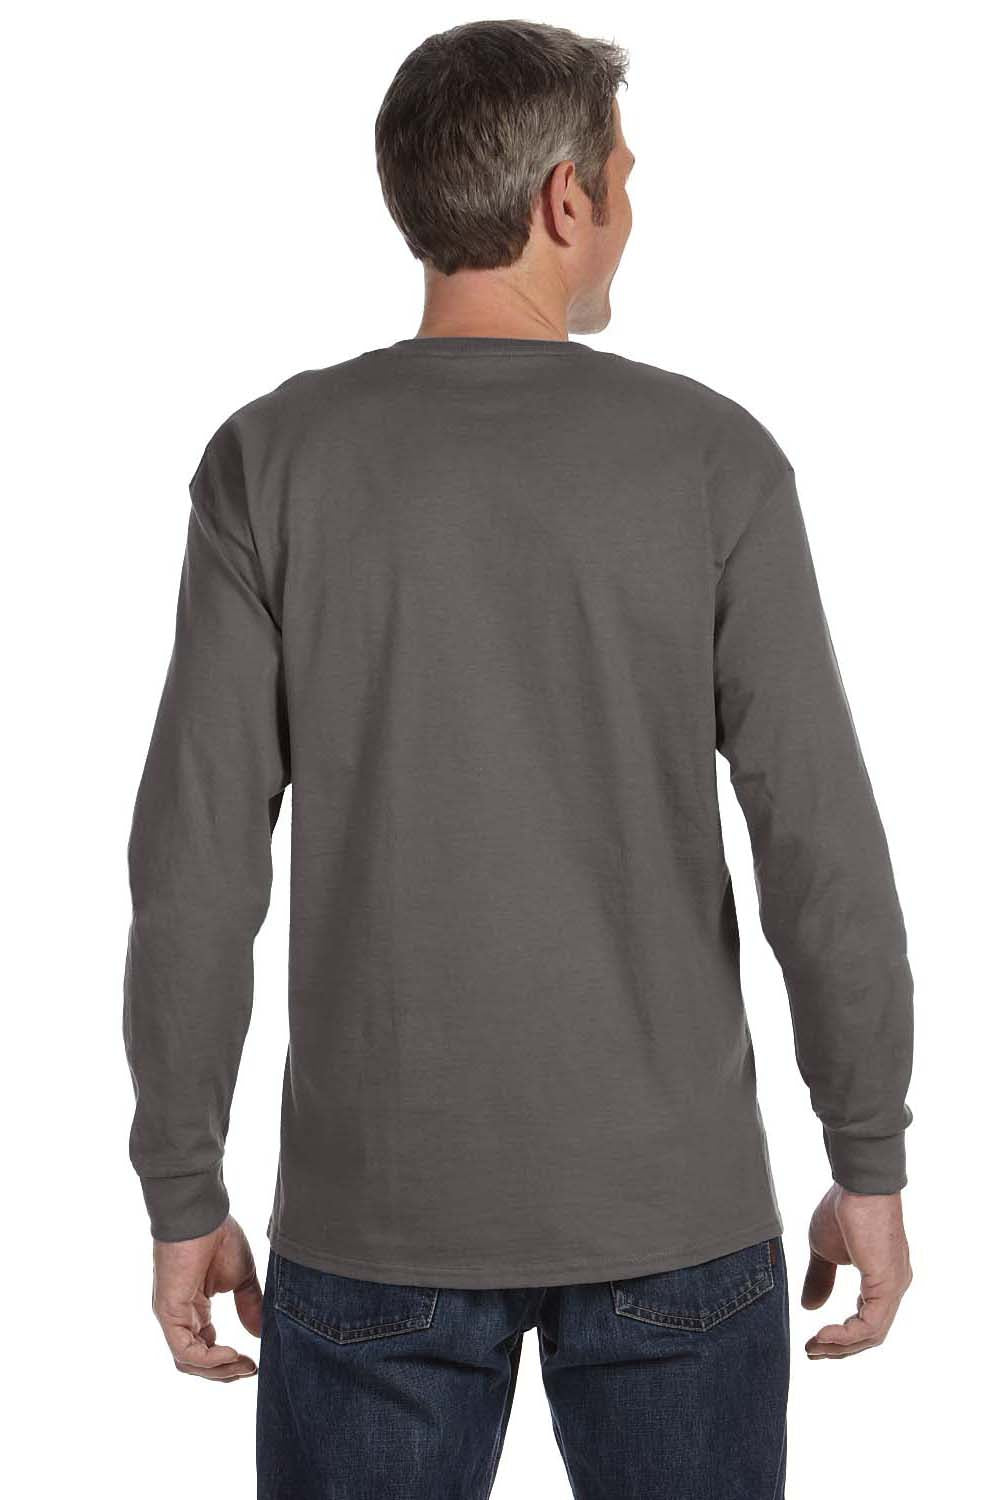 Hanes 5586 Mens ComfortSoft Long Sleeve Crewneck T-Shirt Smoke Grey Back